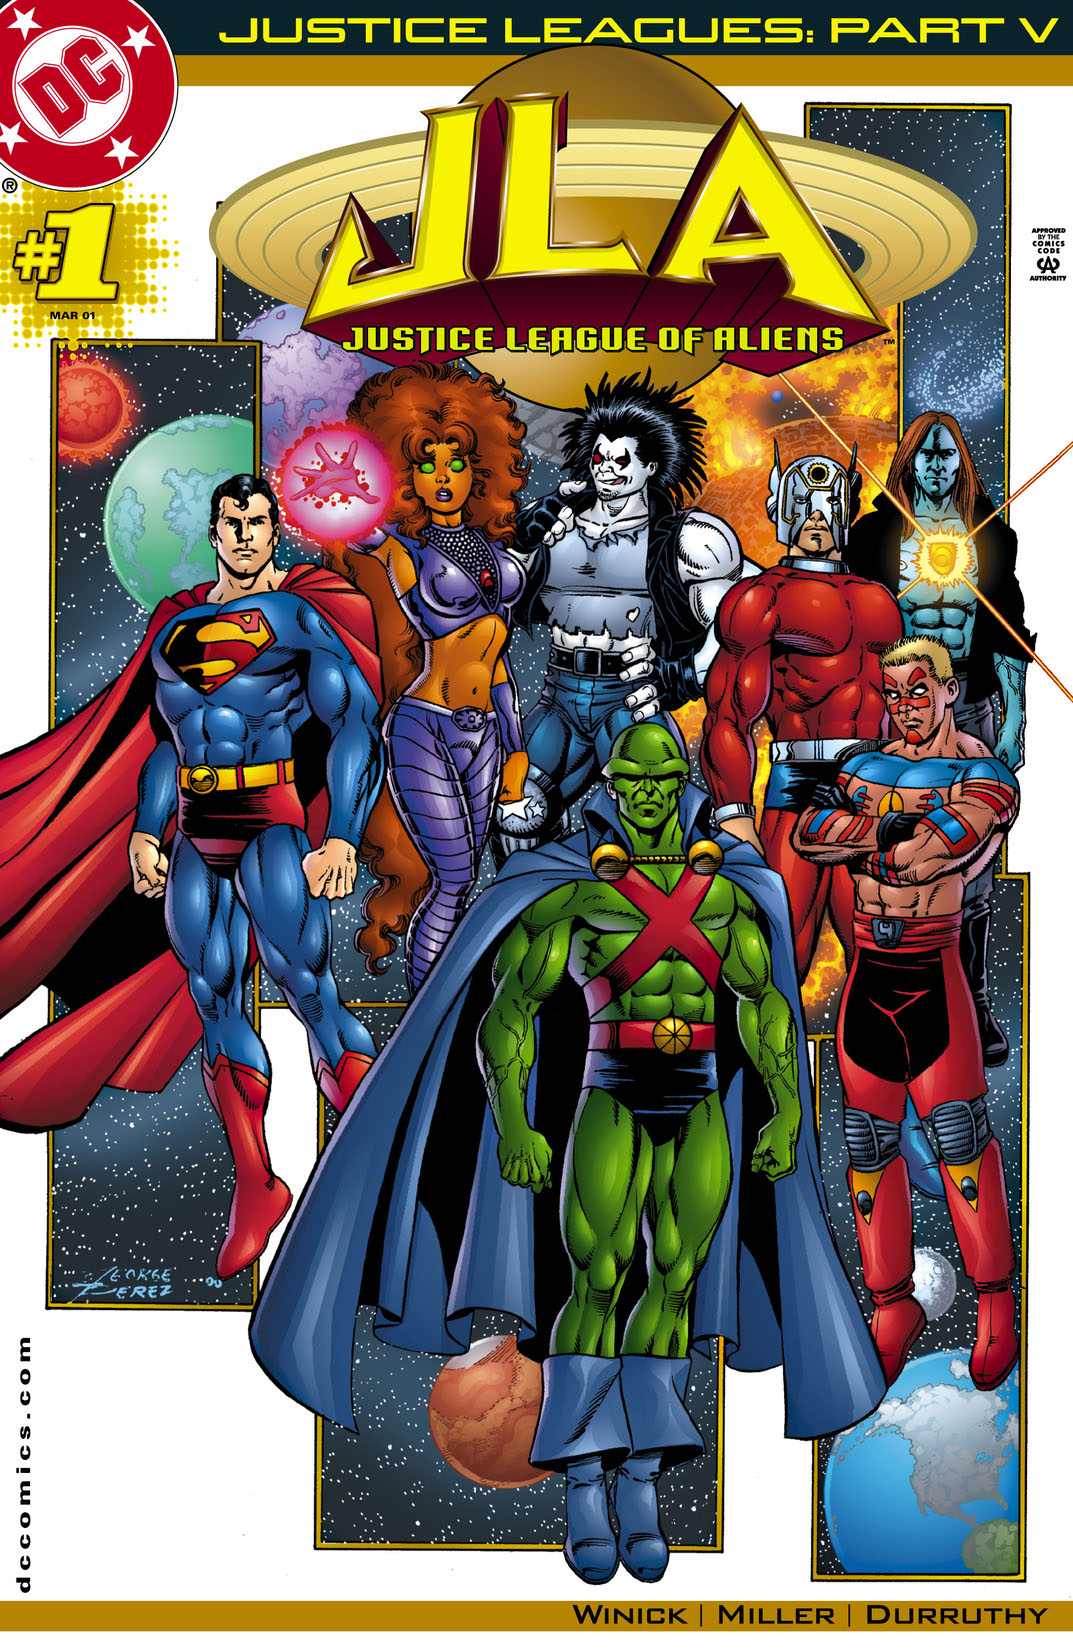 Justice Leagues: Justice League of Aliens #1 preview images